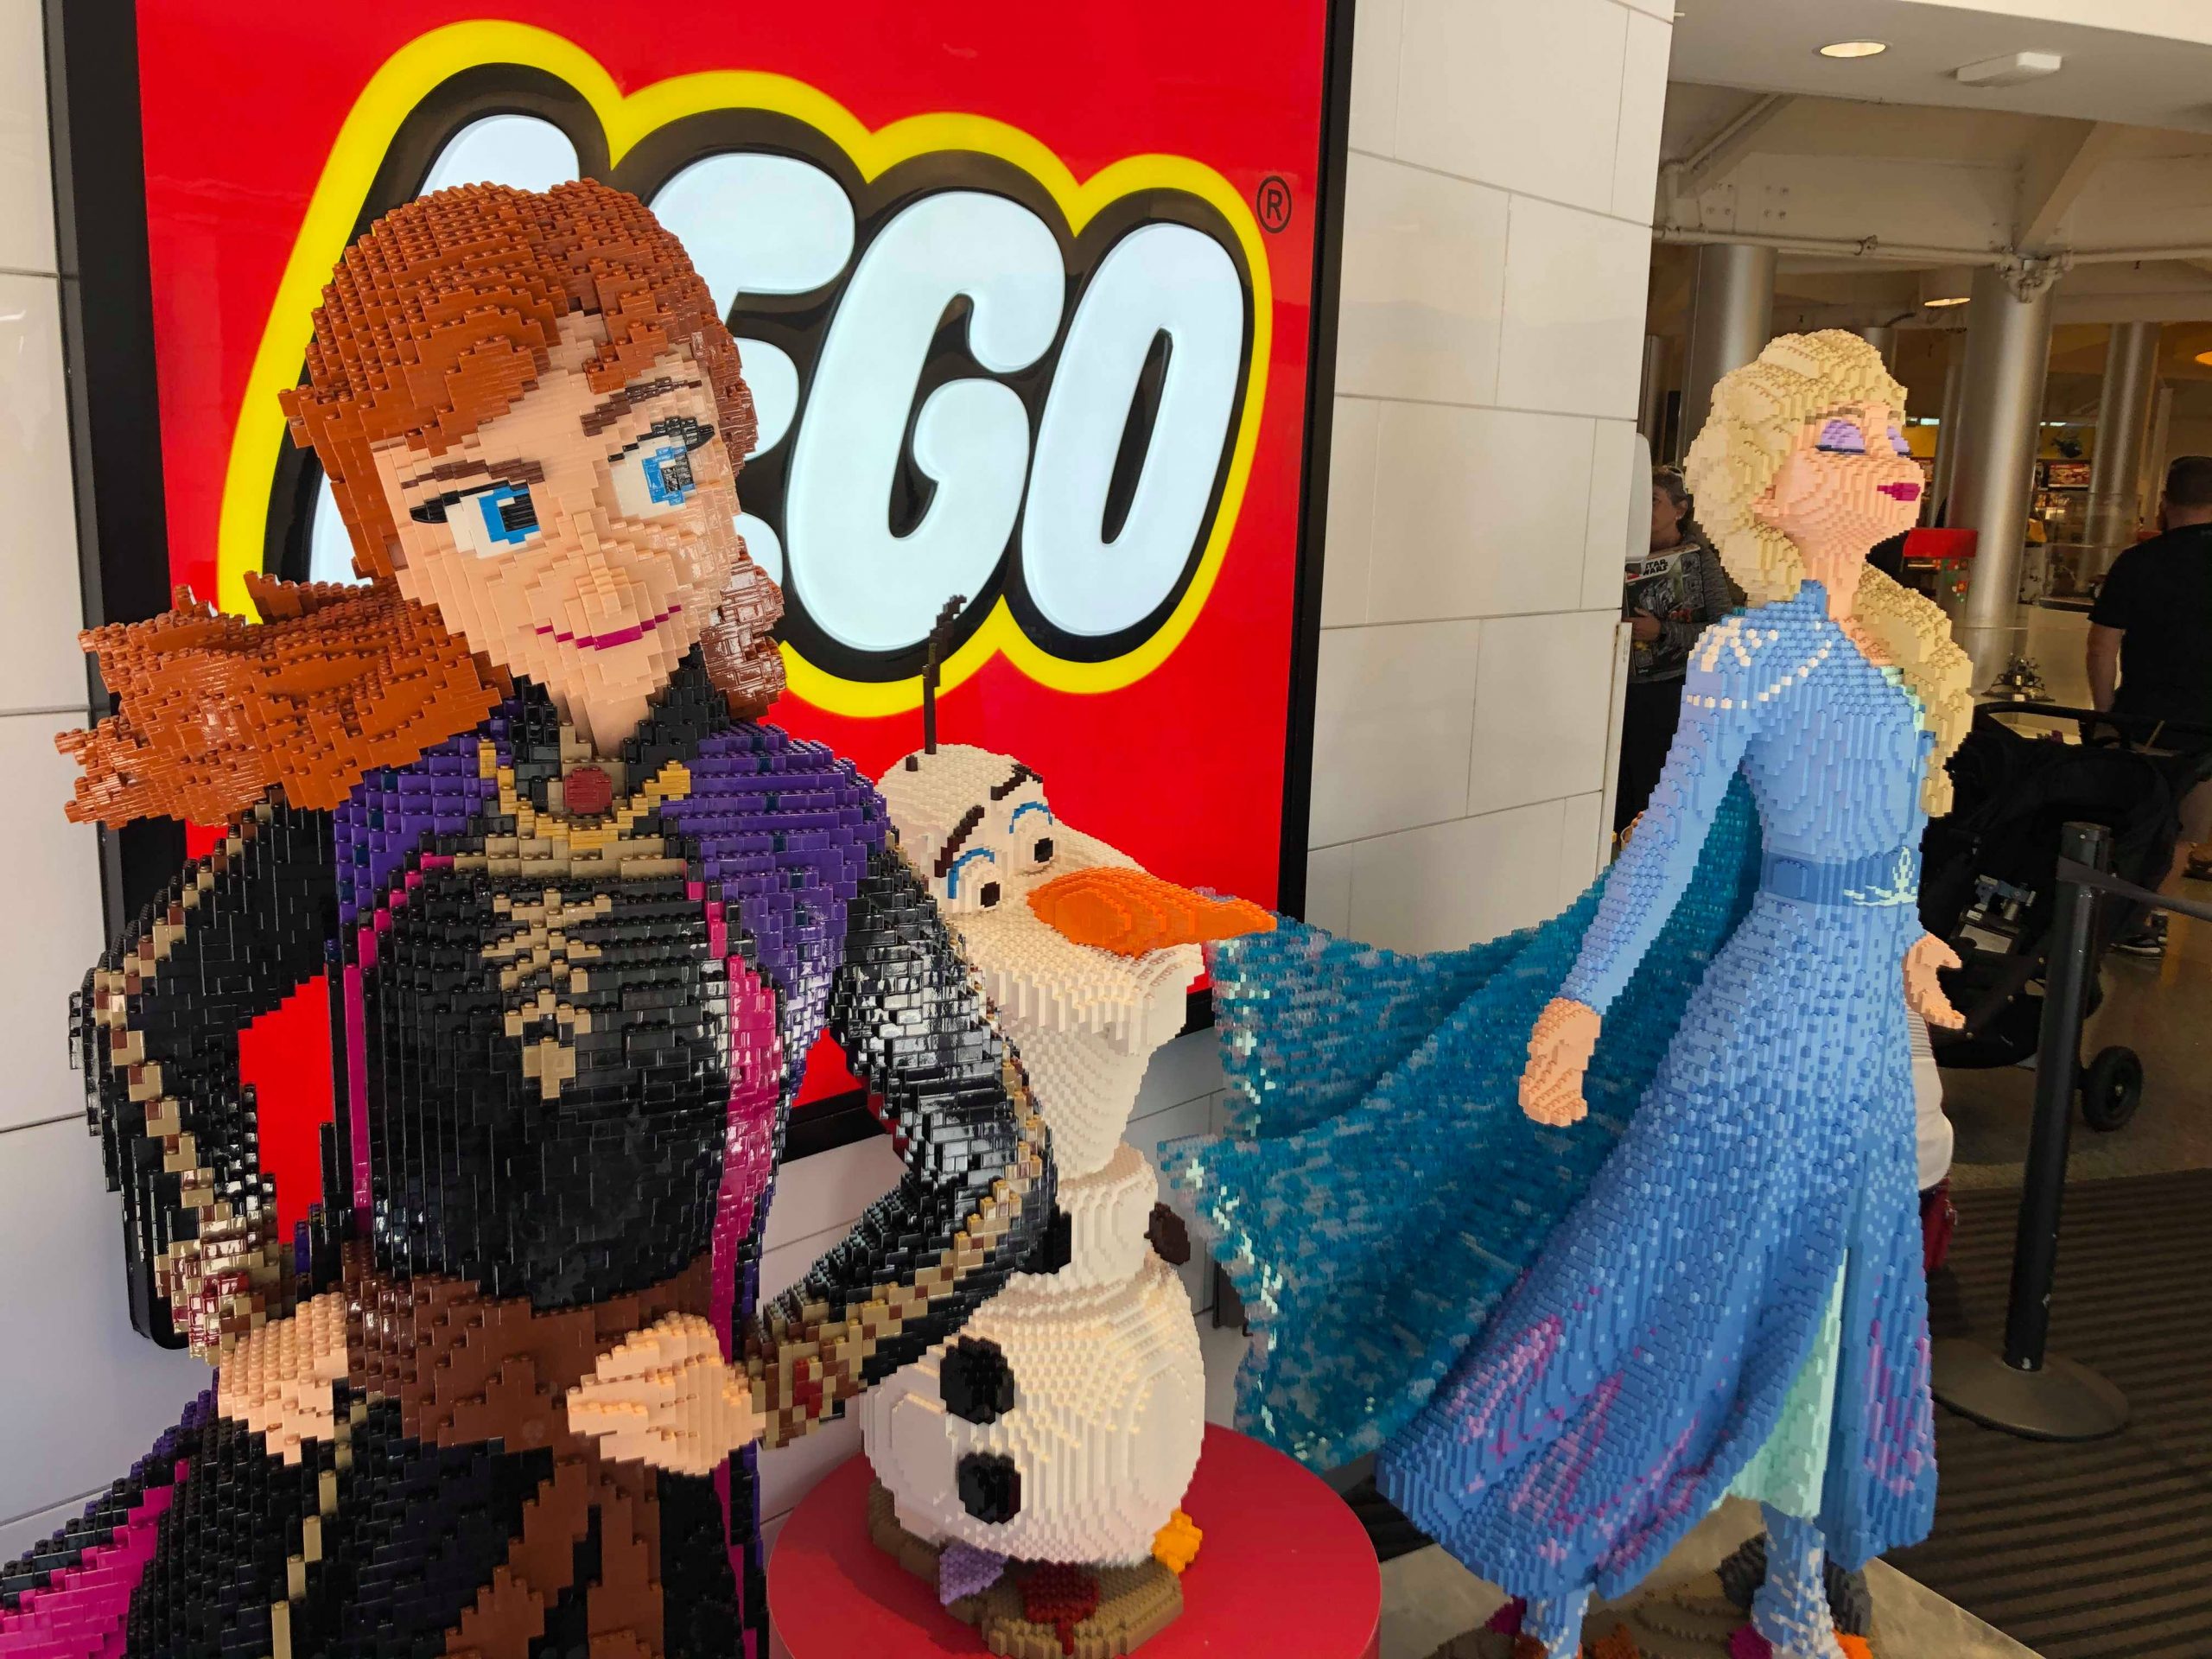 Frozen 2 LEGO Display Materializes in Disney Springs